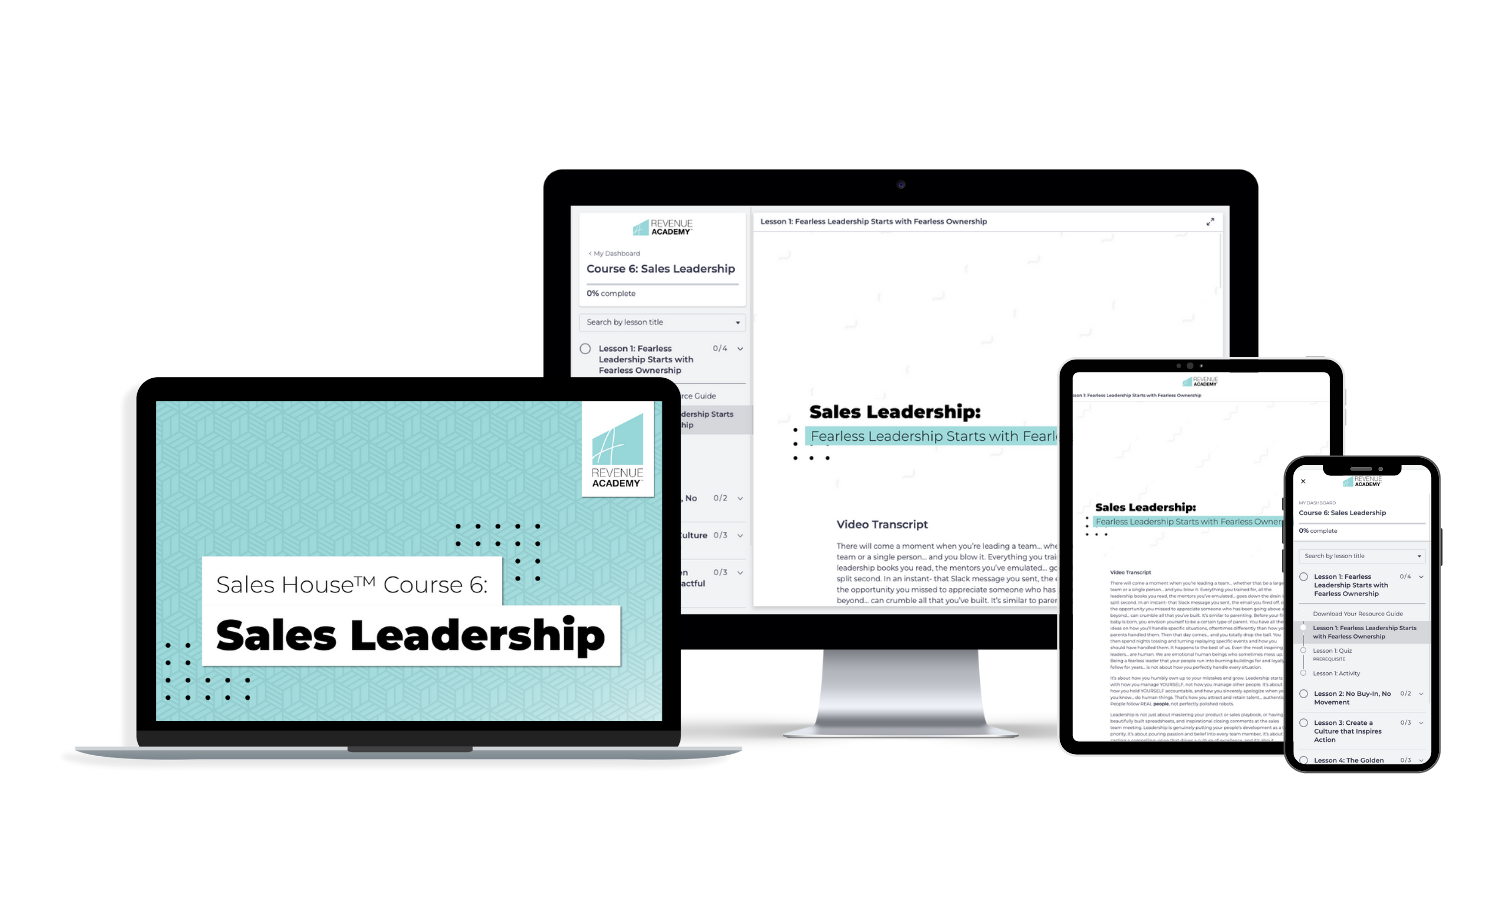 Sales House™ Course 6 Sales Leadership